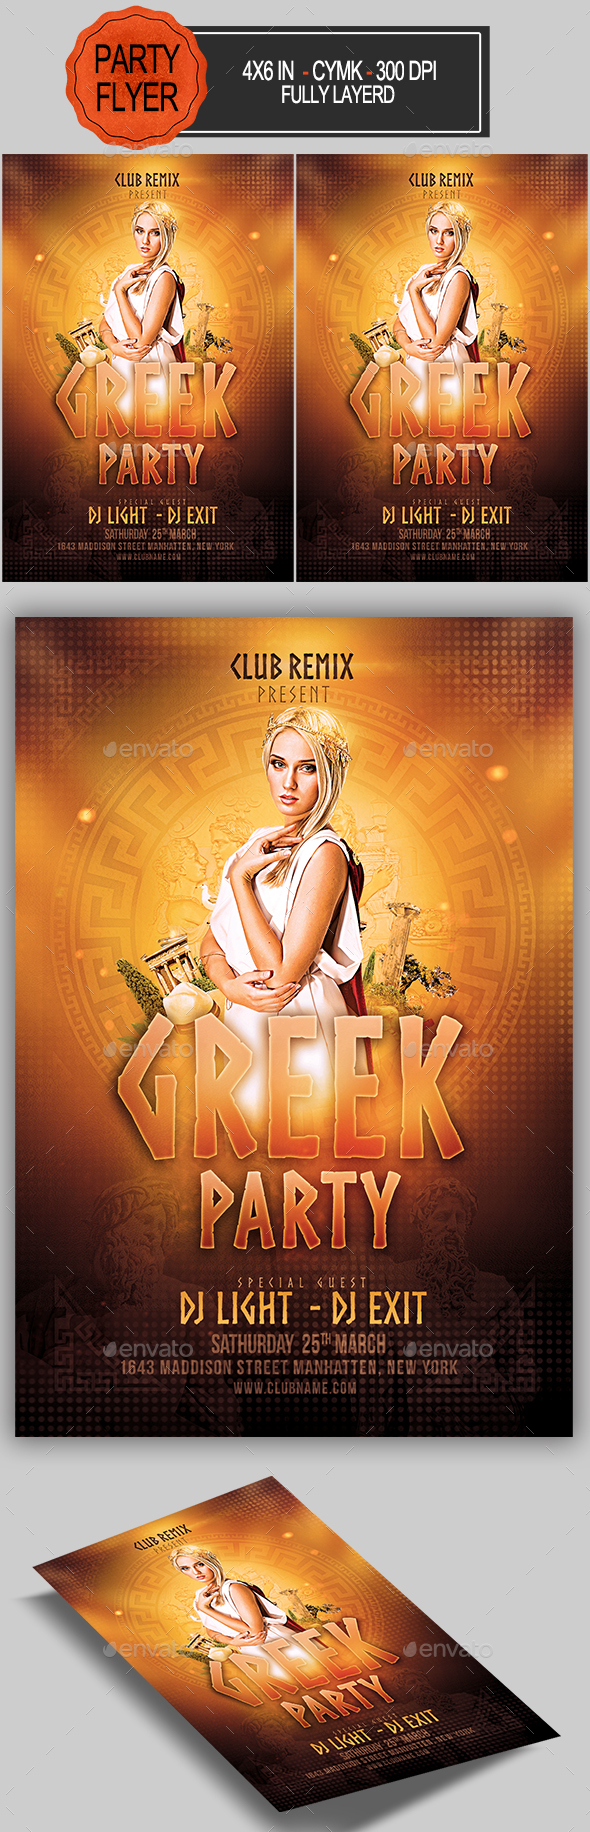 Greek Party Flyer